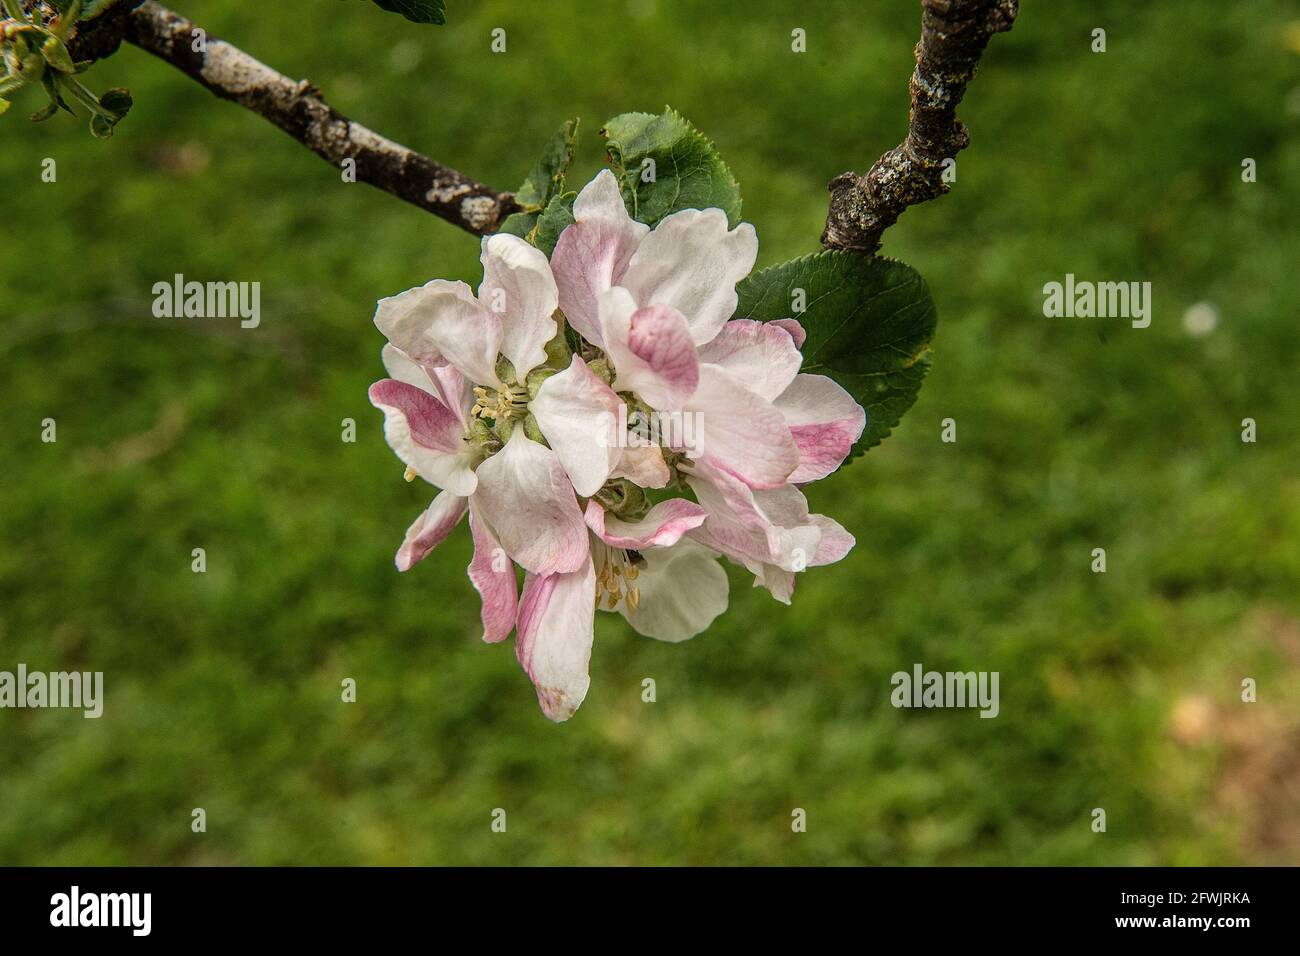 Apple blossom on the tree Stock Photo